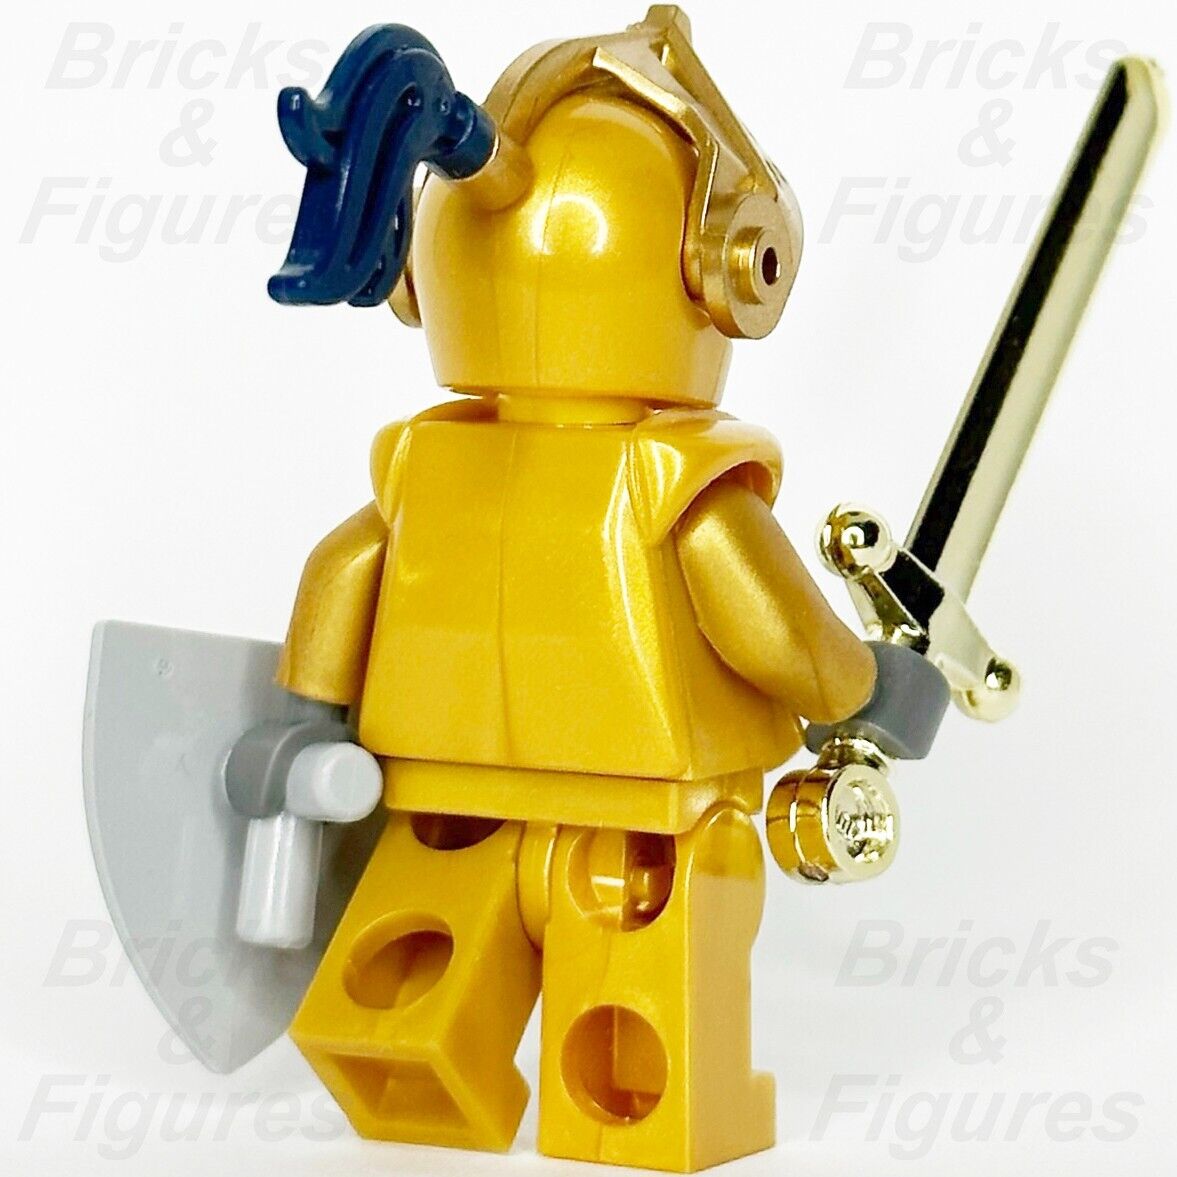 LEGO Castle Gold Knight Minifigure Fantasy Era Golden Minifig 7079 cas415 Crown 4